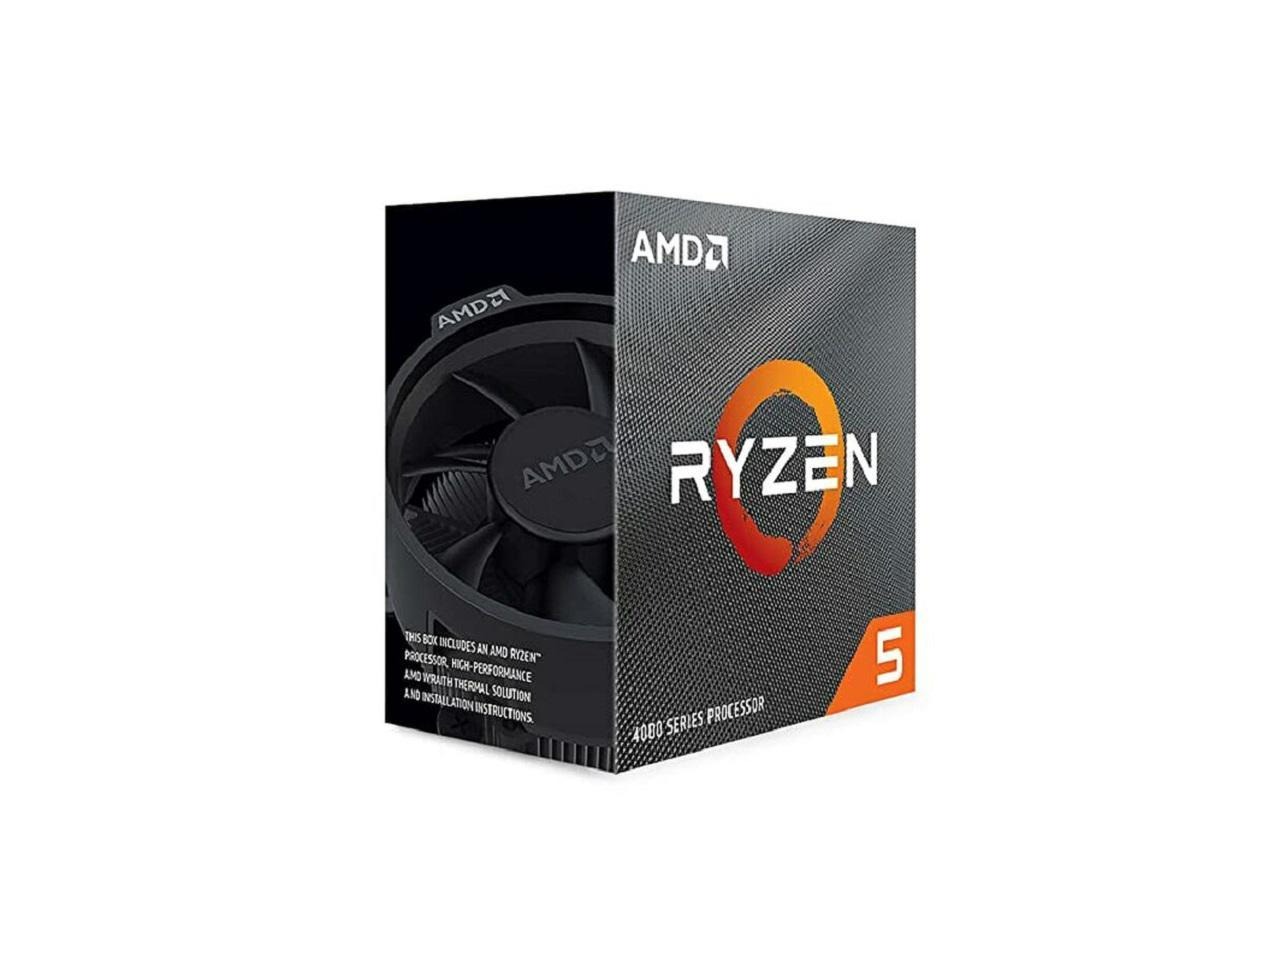 AMD Ryzen™ 5 4600G, 6-Core, 12-Thread Unlocked Desktop Processor with Wraith Stealth Cooler $94